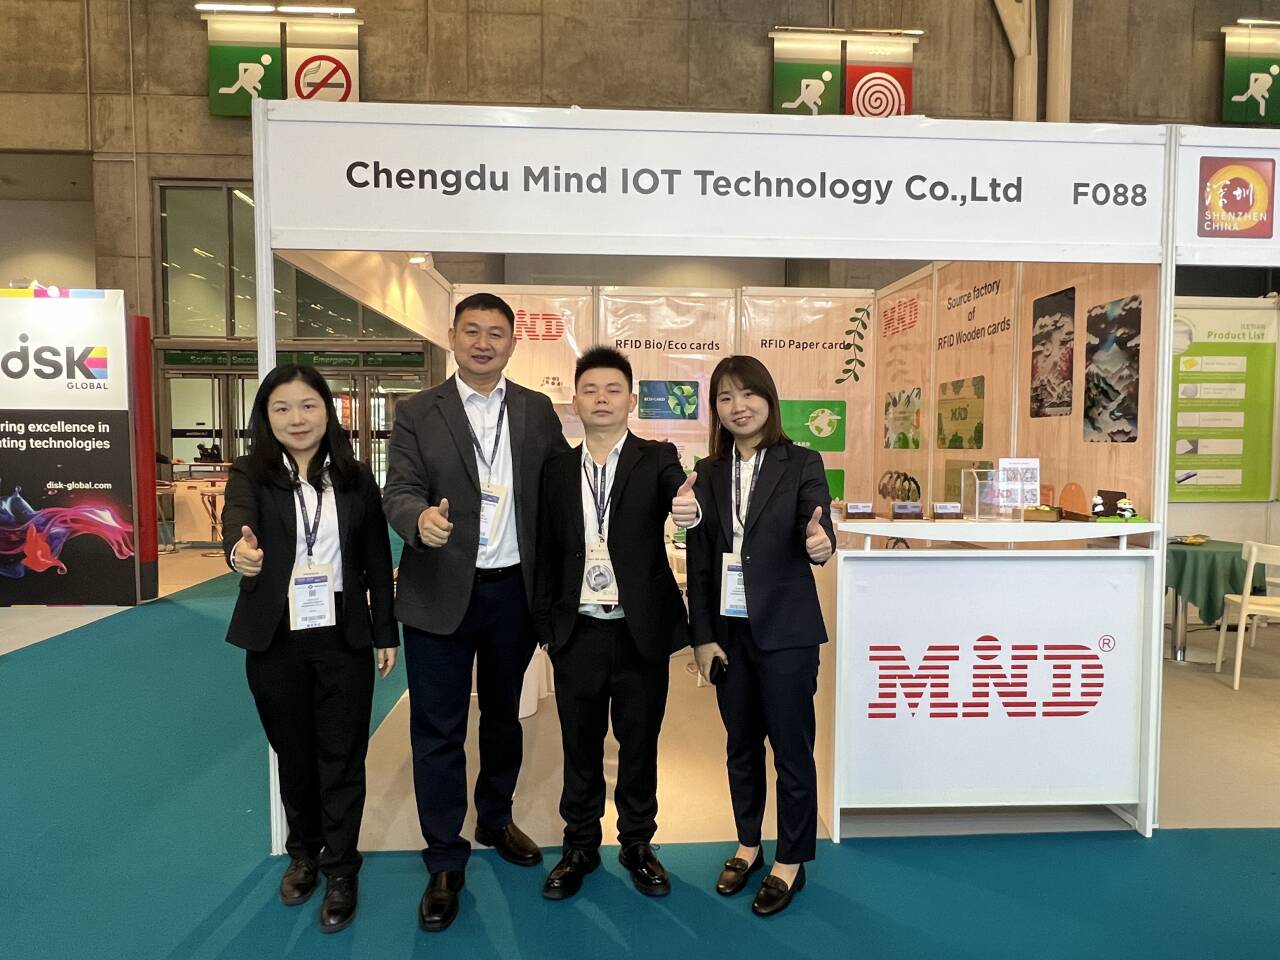 Chengdu Mind ເຂົ້າຮ່ວມໃນ Paris Smart Card, Payment and Intelligent Identification, Digital Security Exhibition ເປີດໃນມື້ນີ້!